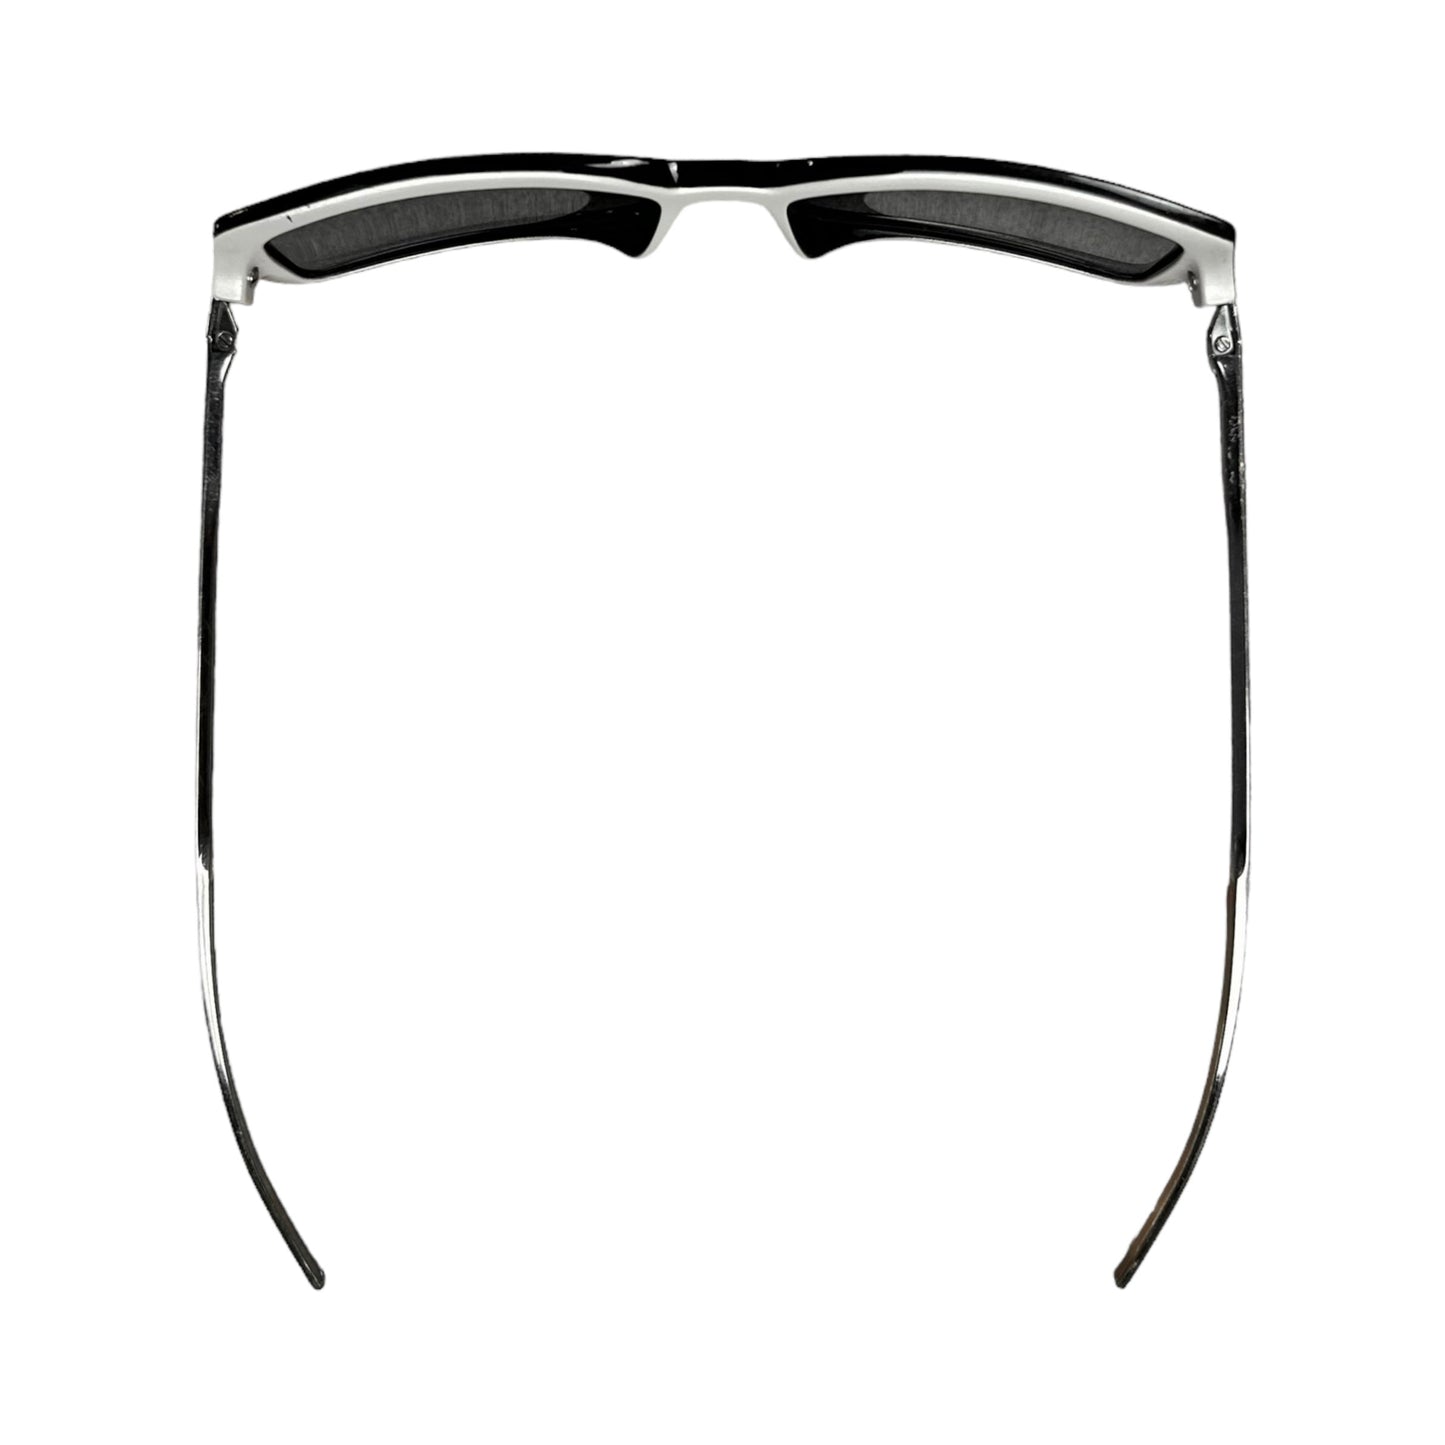 Dior Black Squared Sunglasses